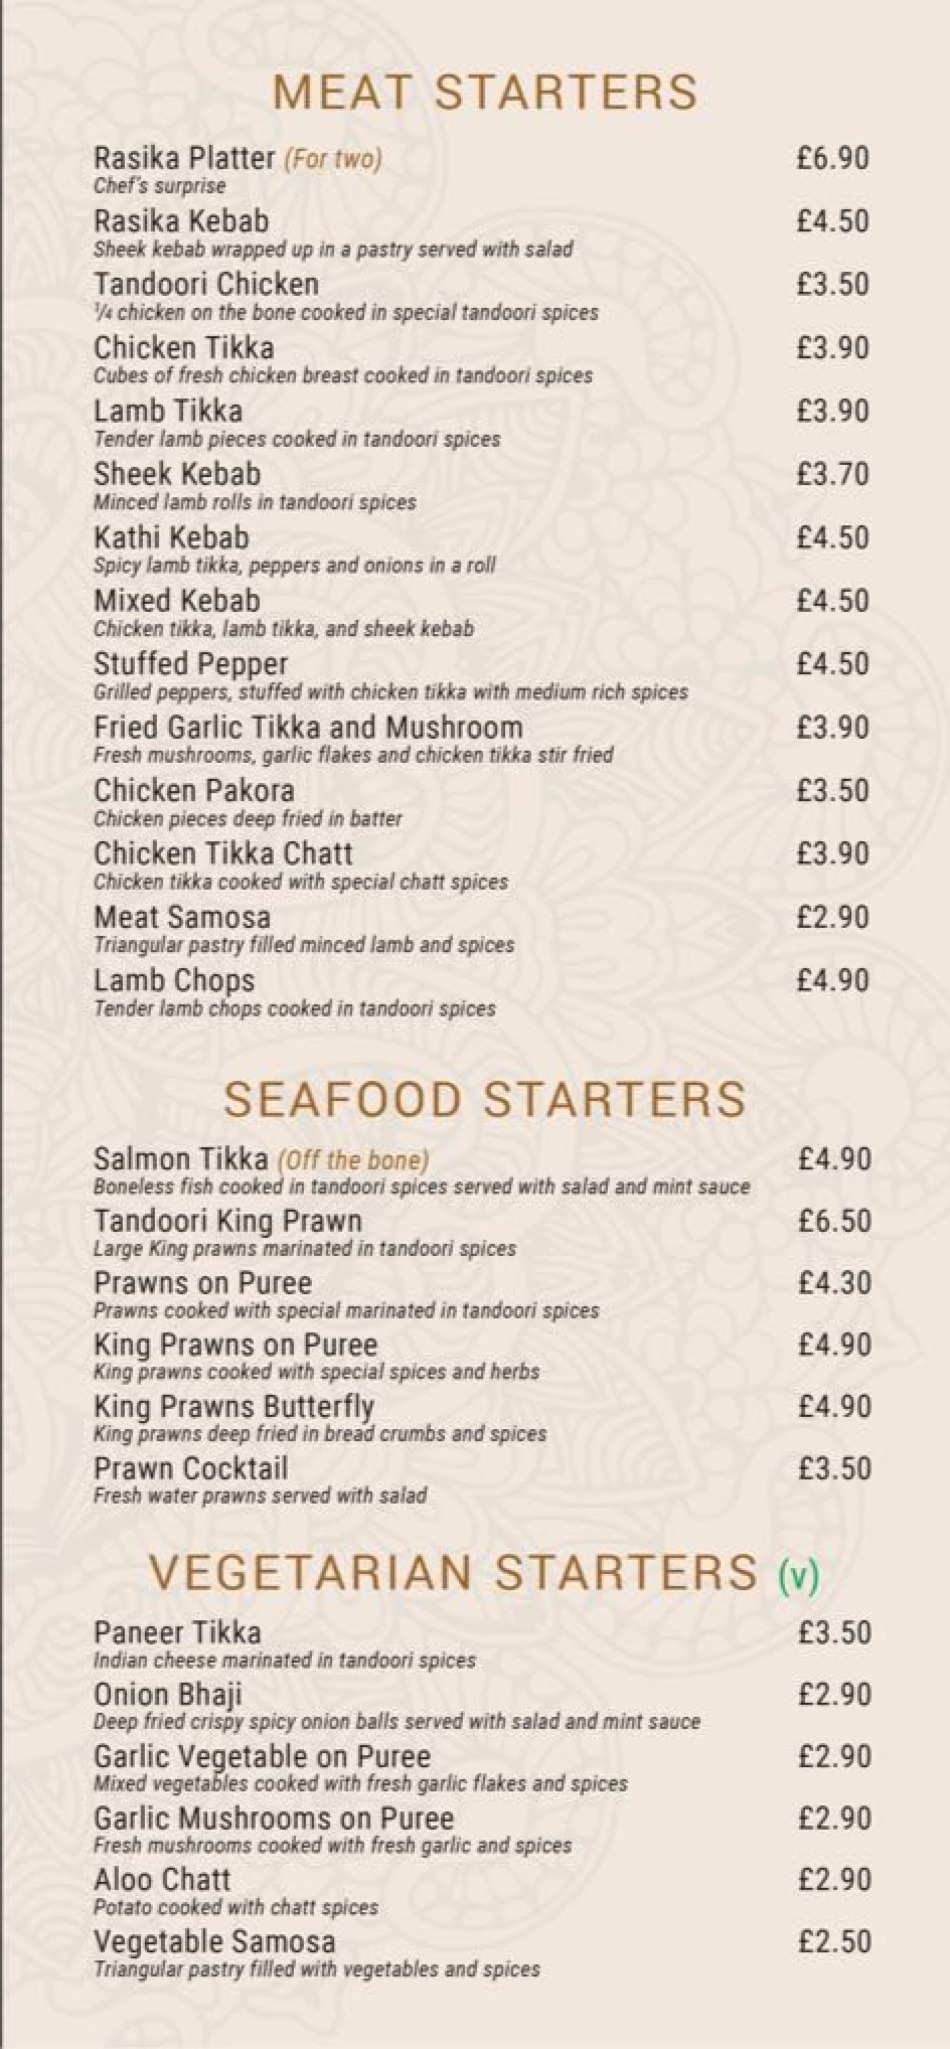 Takeaway Restaurant Menu Page - Rasika Indian Restaurant - Newcastle upon Tyne